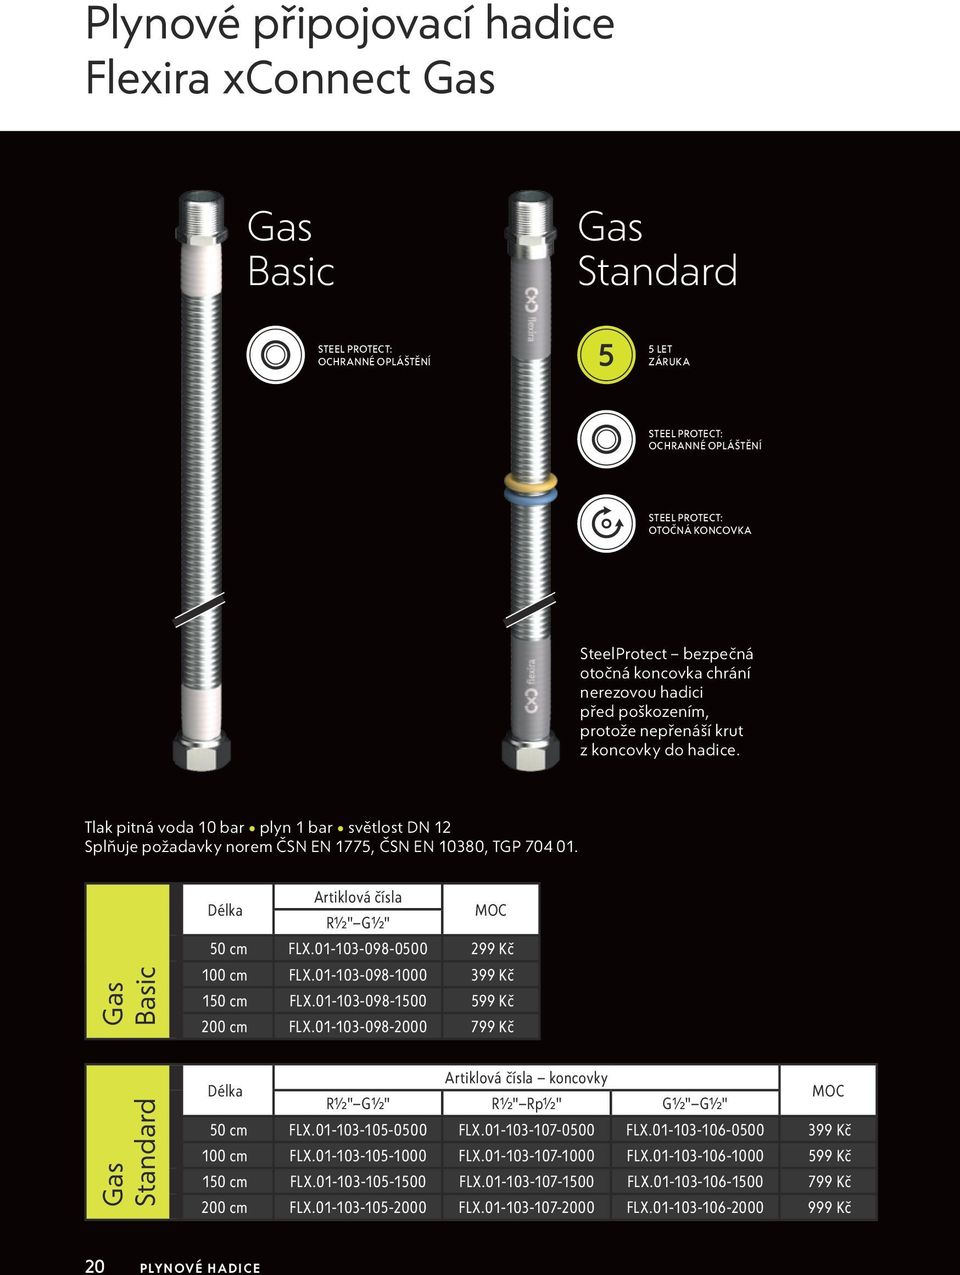 Tlak pitná voda 10 bar plyn 1 bar světlost DN 12 Splňuje požadavky norem ČSN EN 1775, ČSN EN 10380, TGP 704 01. Gas Basic Gas Standard Délka Artiklová čísla R½" G½" MOC 50 cm FLX.